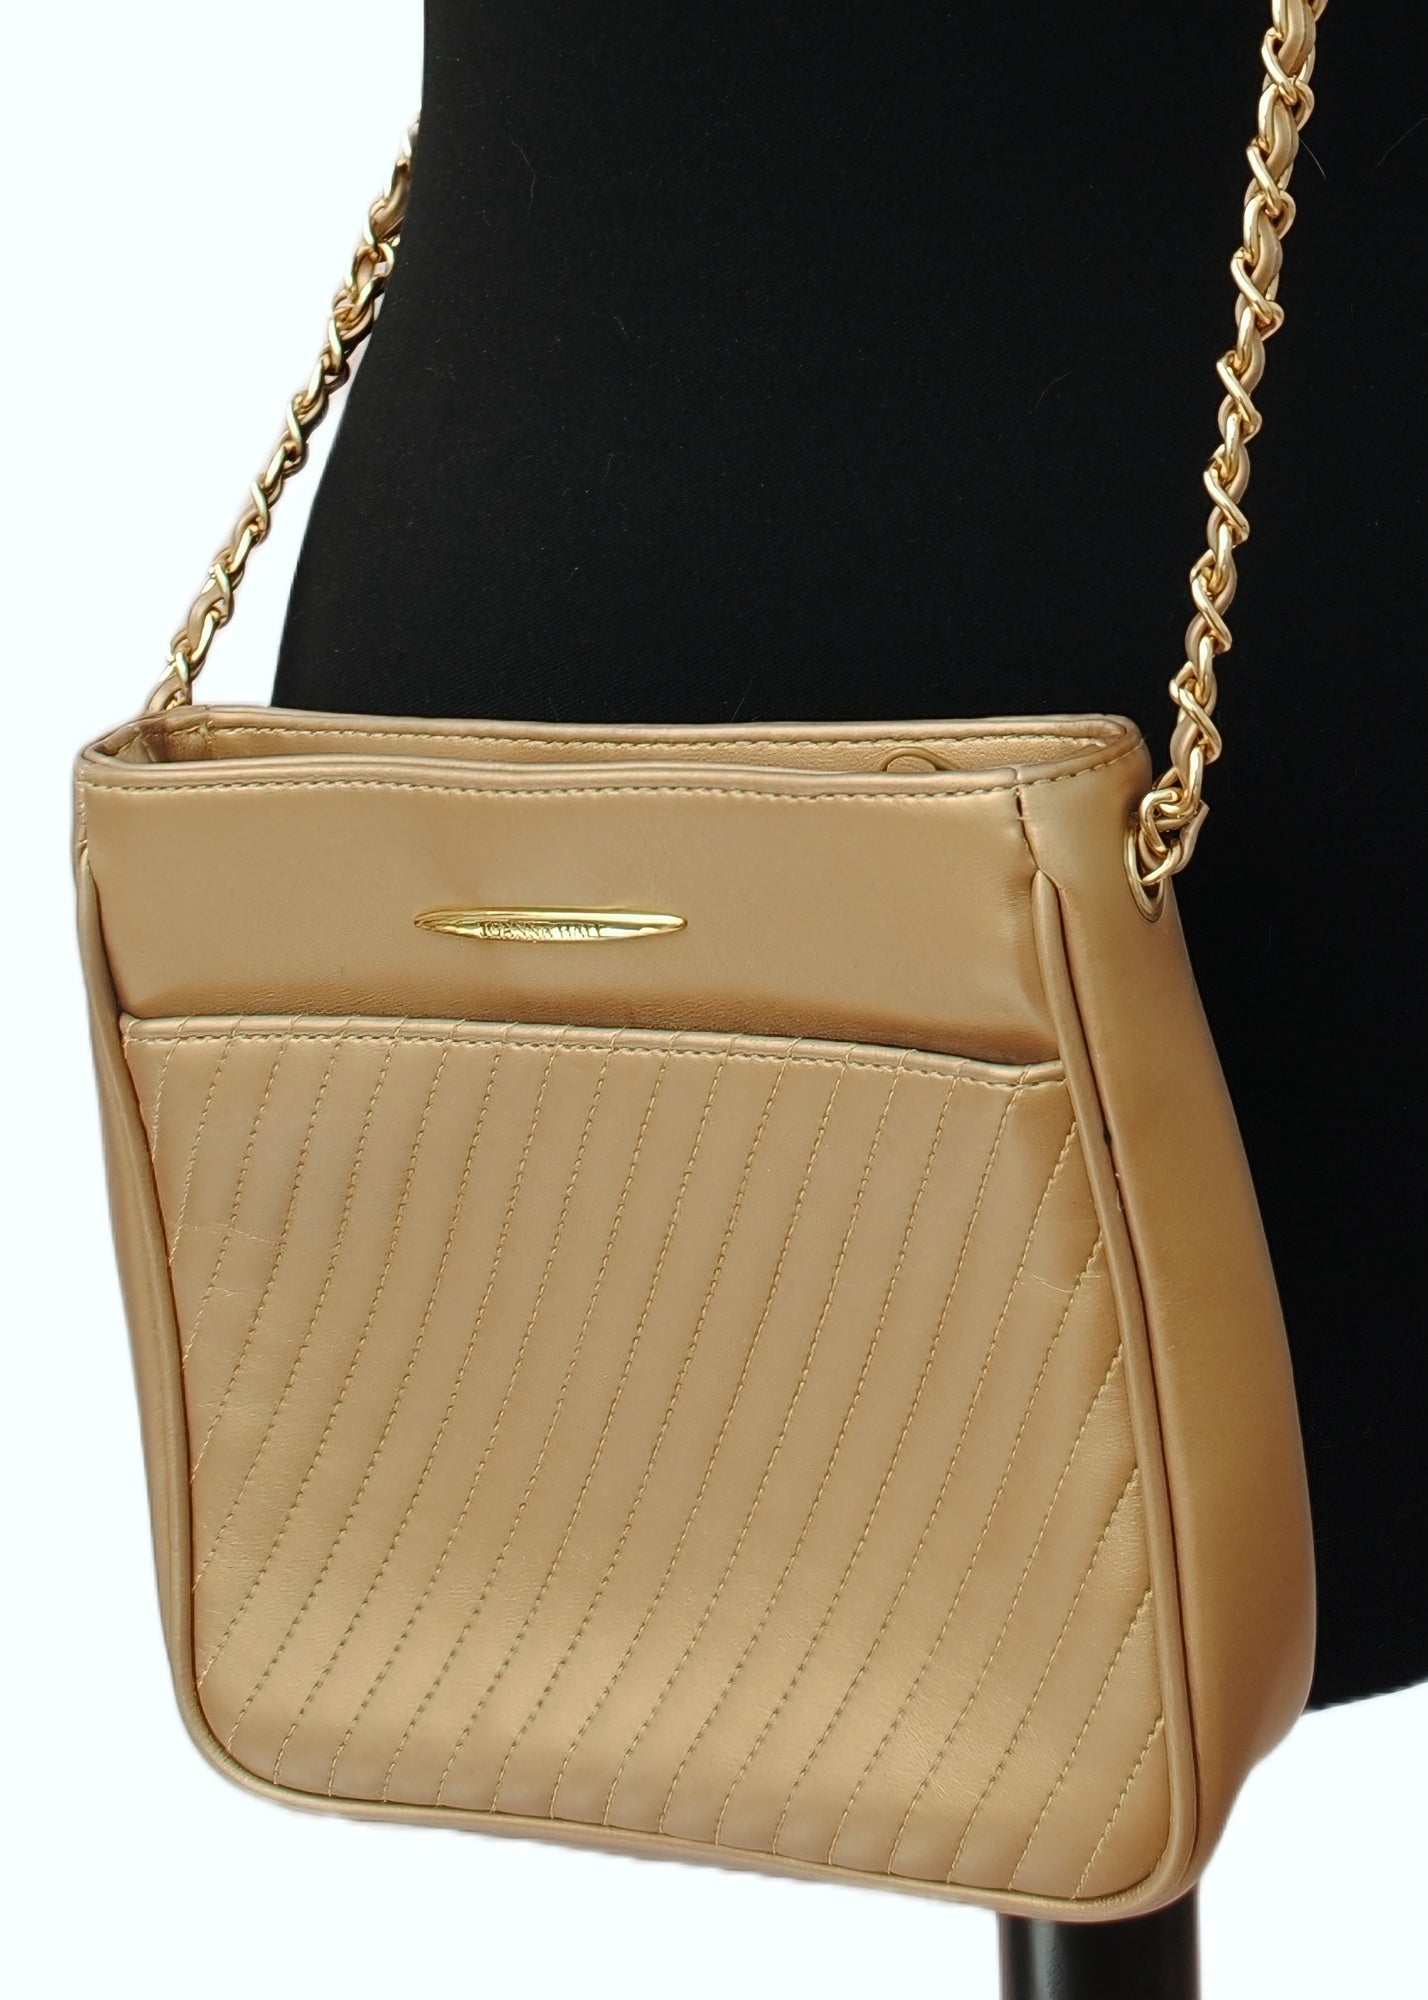 joanna hall gold crossbody handbag with long chain strap